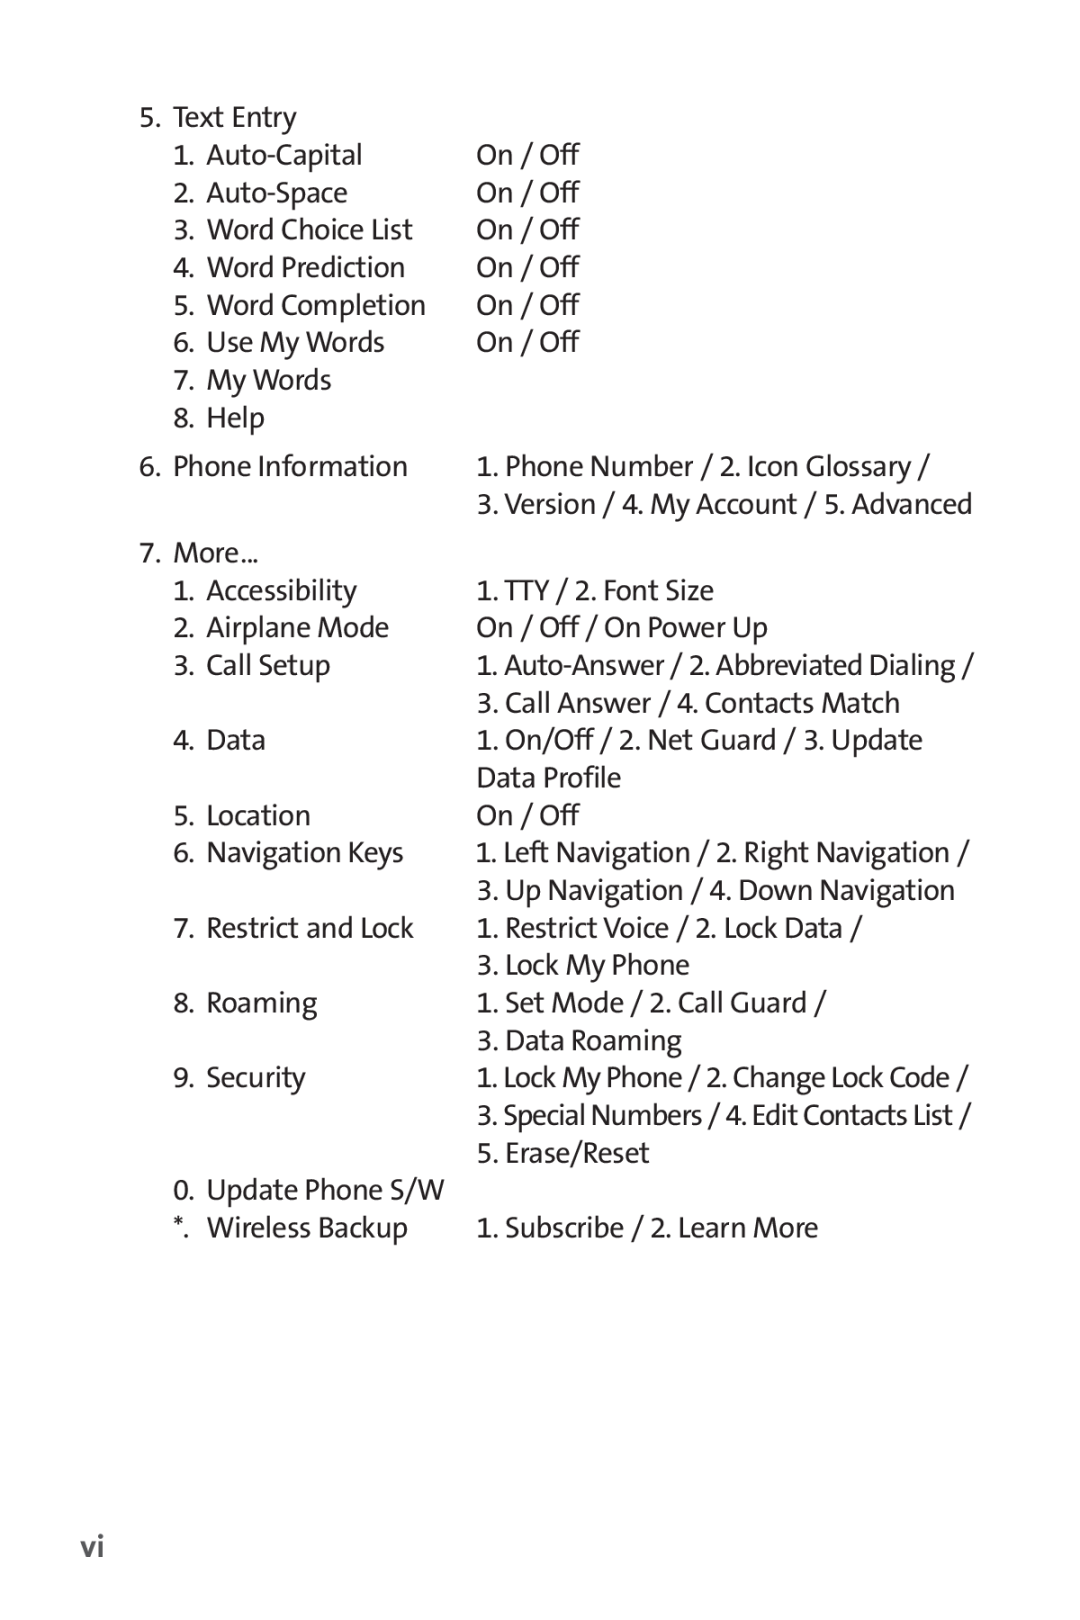 Sprint Nextel LX160 manual Version / 4. My Account / 5. Advanced, Auto-Answer / 2. Abbreviated Dialing 